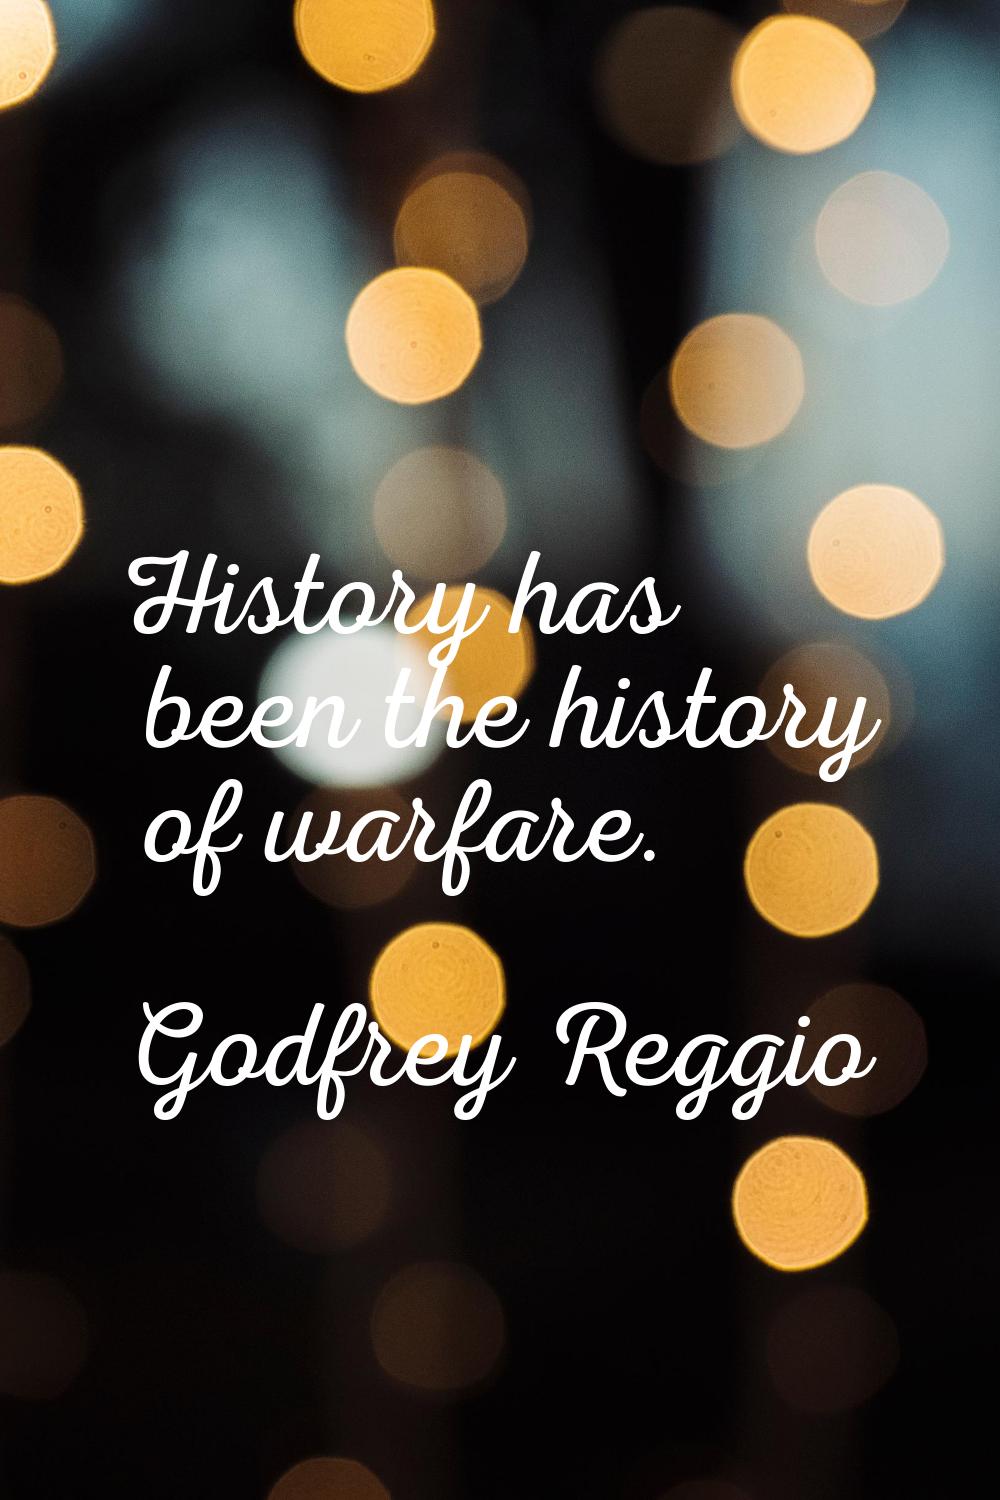 History has been the history of warfare.